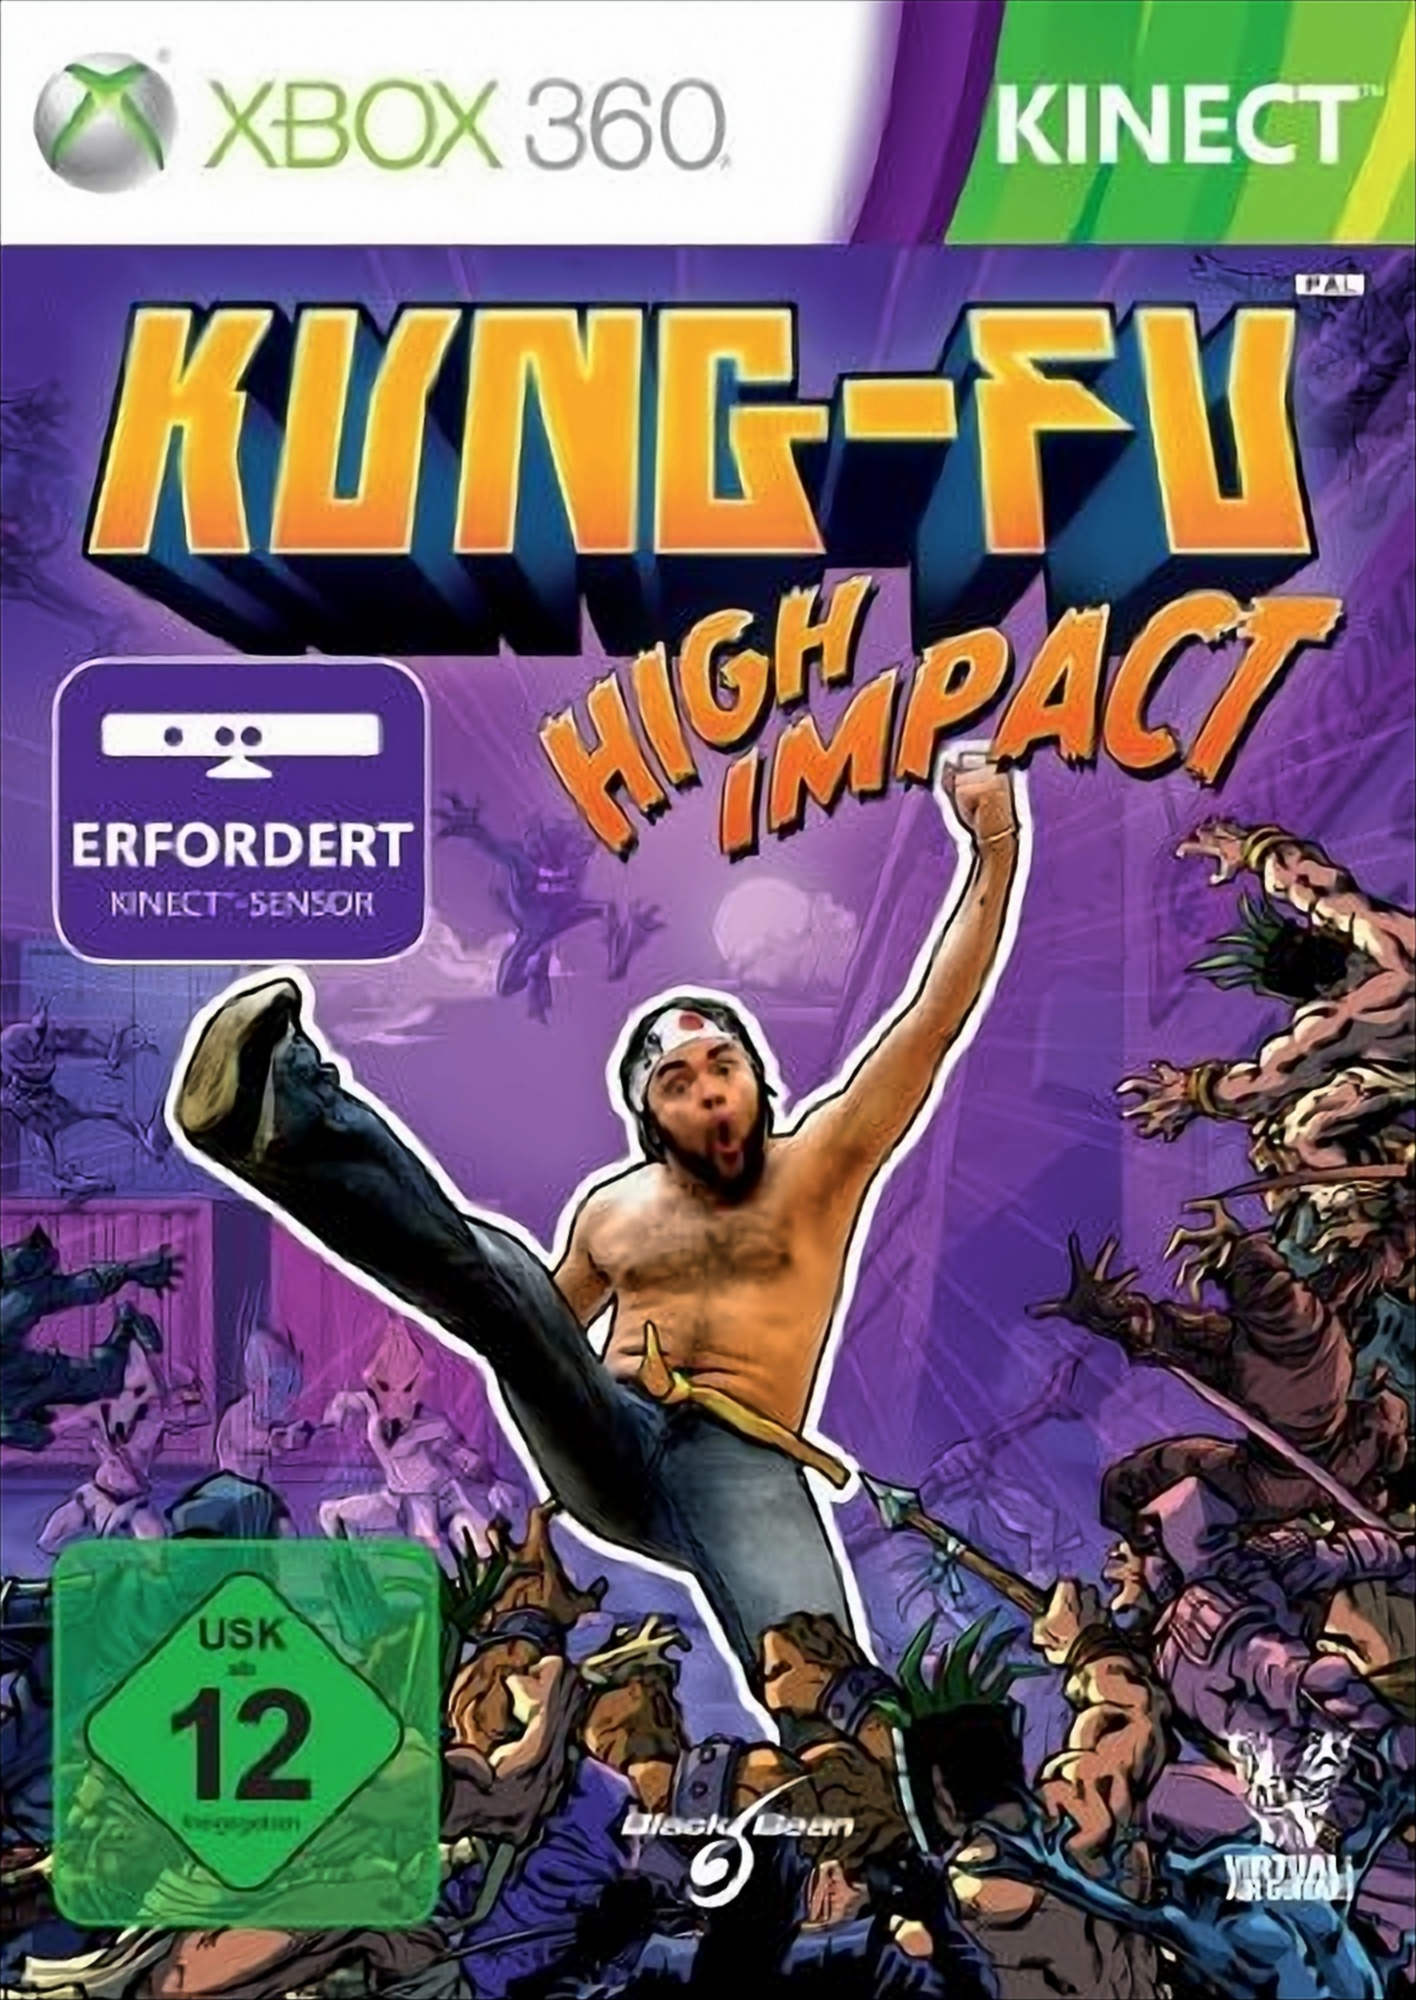 360] Impact High Kung-Fu - [Xbox